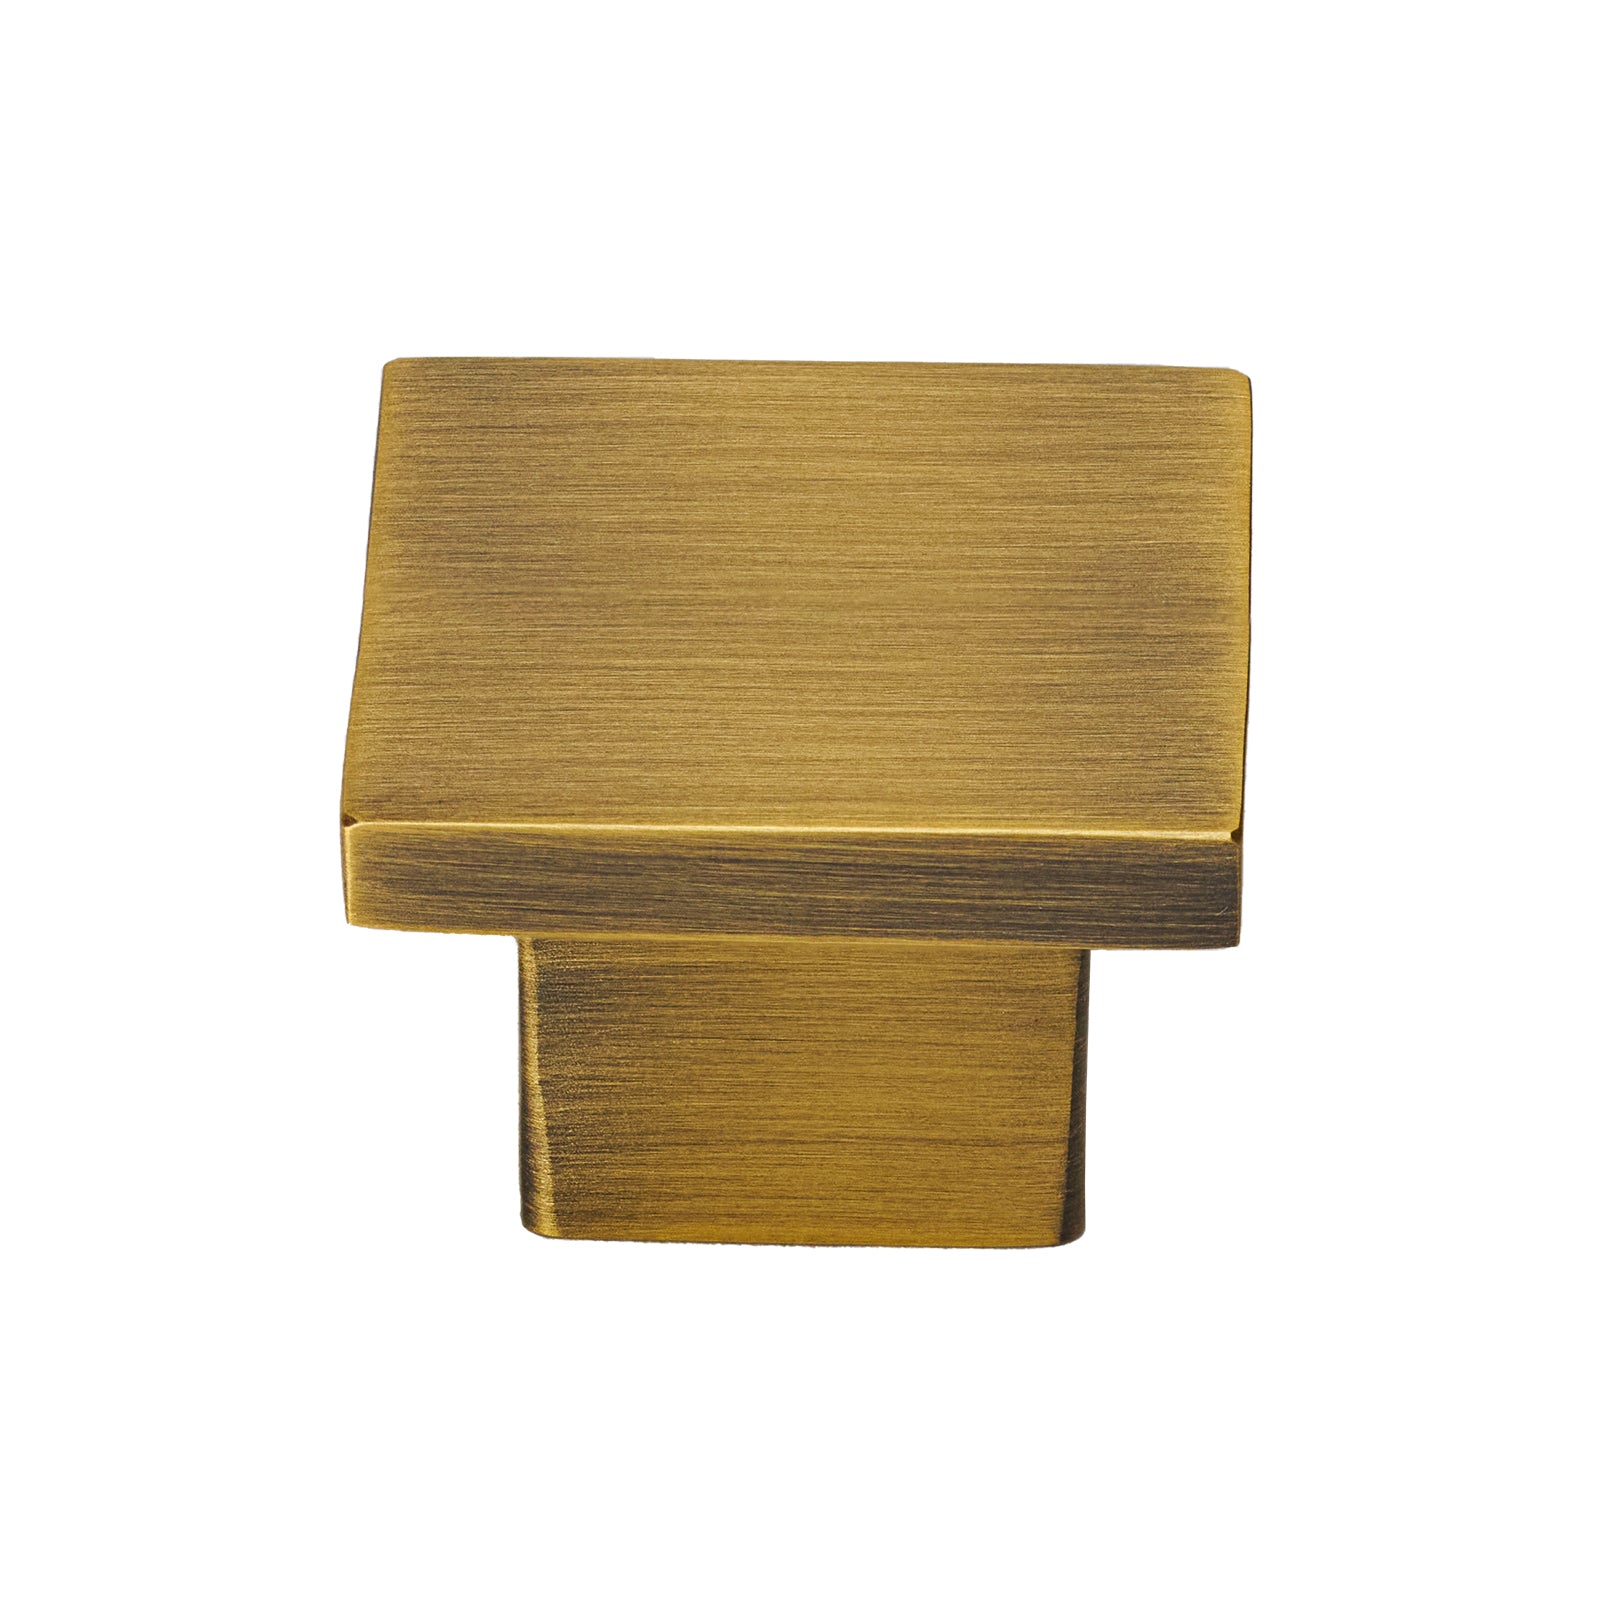 antique brass square cabinet knob, cupboard knob SHOW